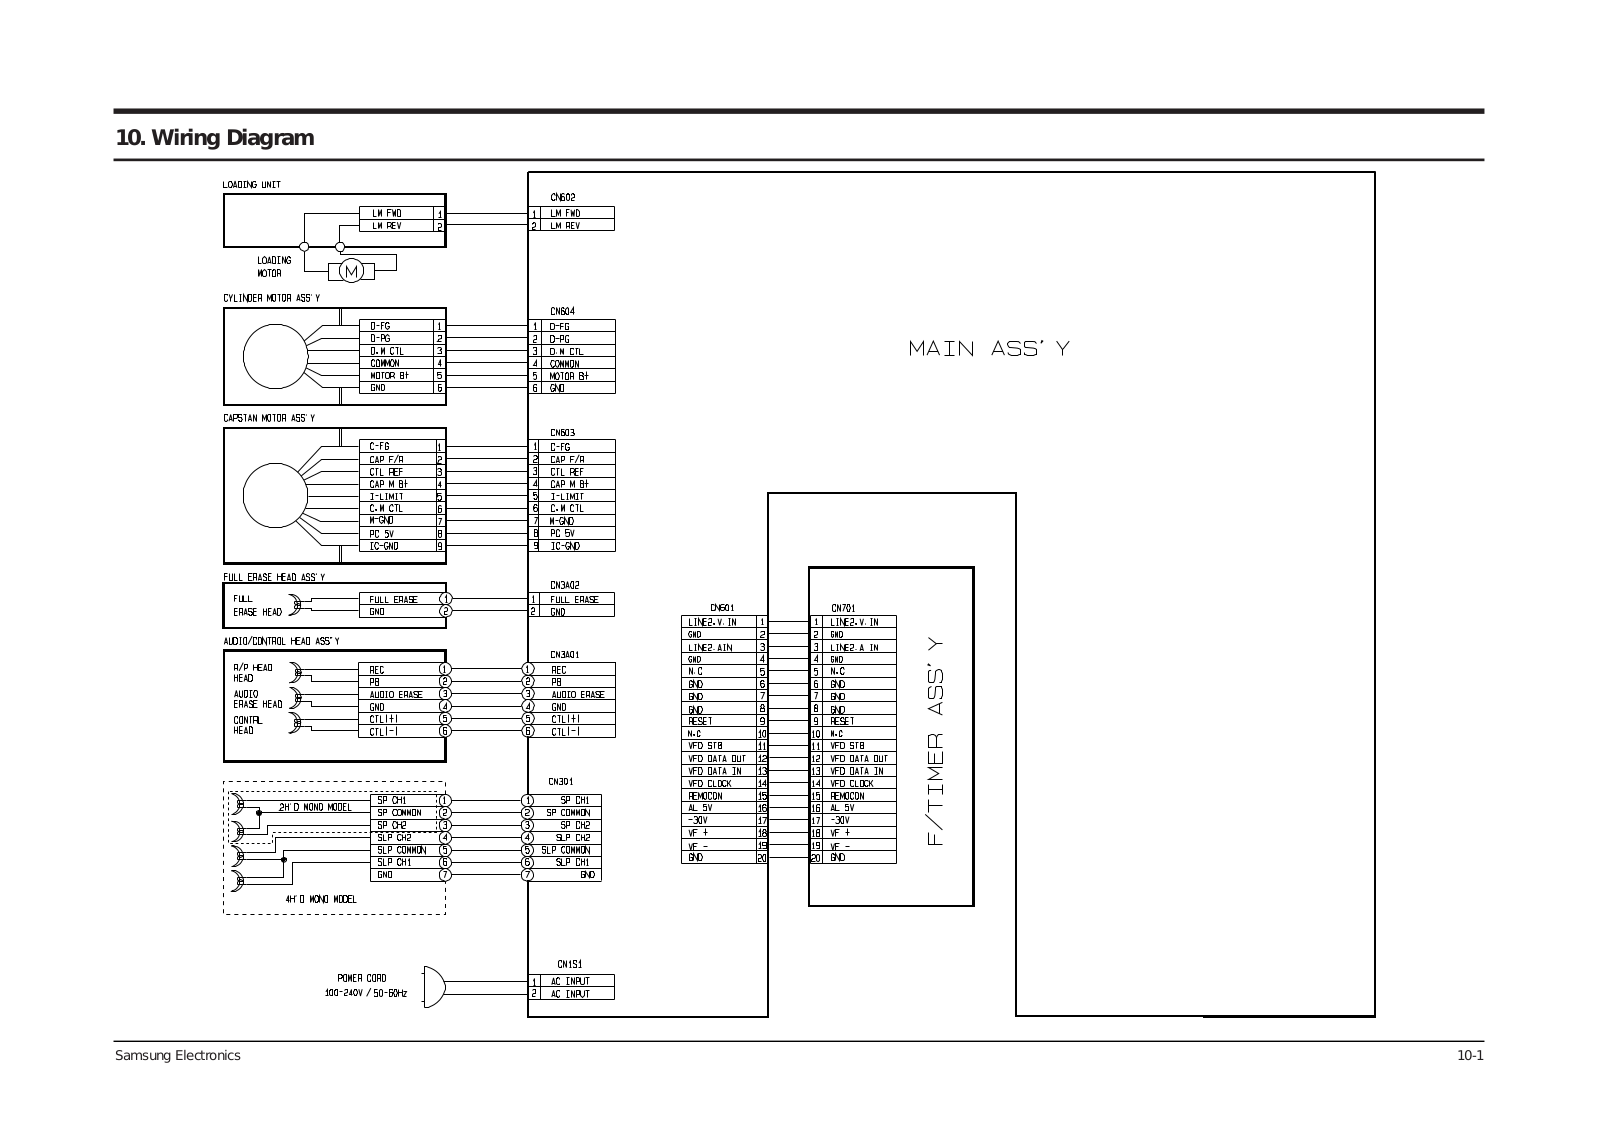 Samsung sv-201X, sv-203X, SV-A20XK-SEC Wiring Diagram